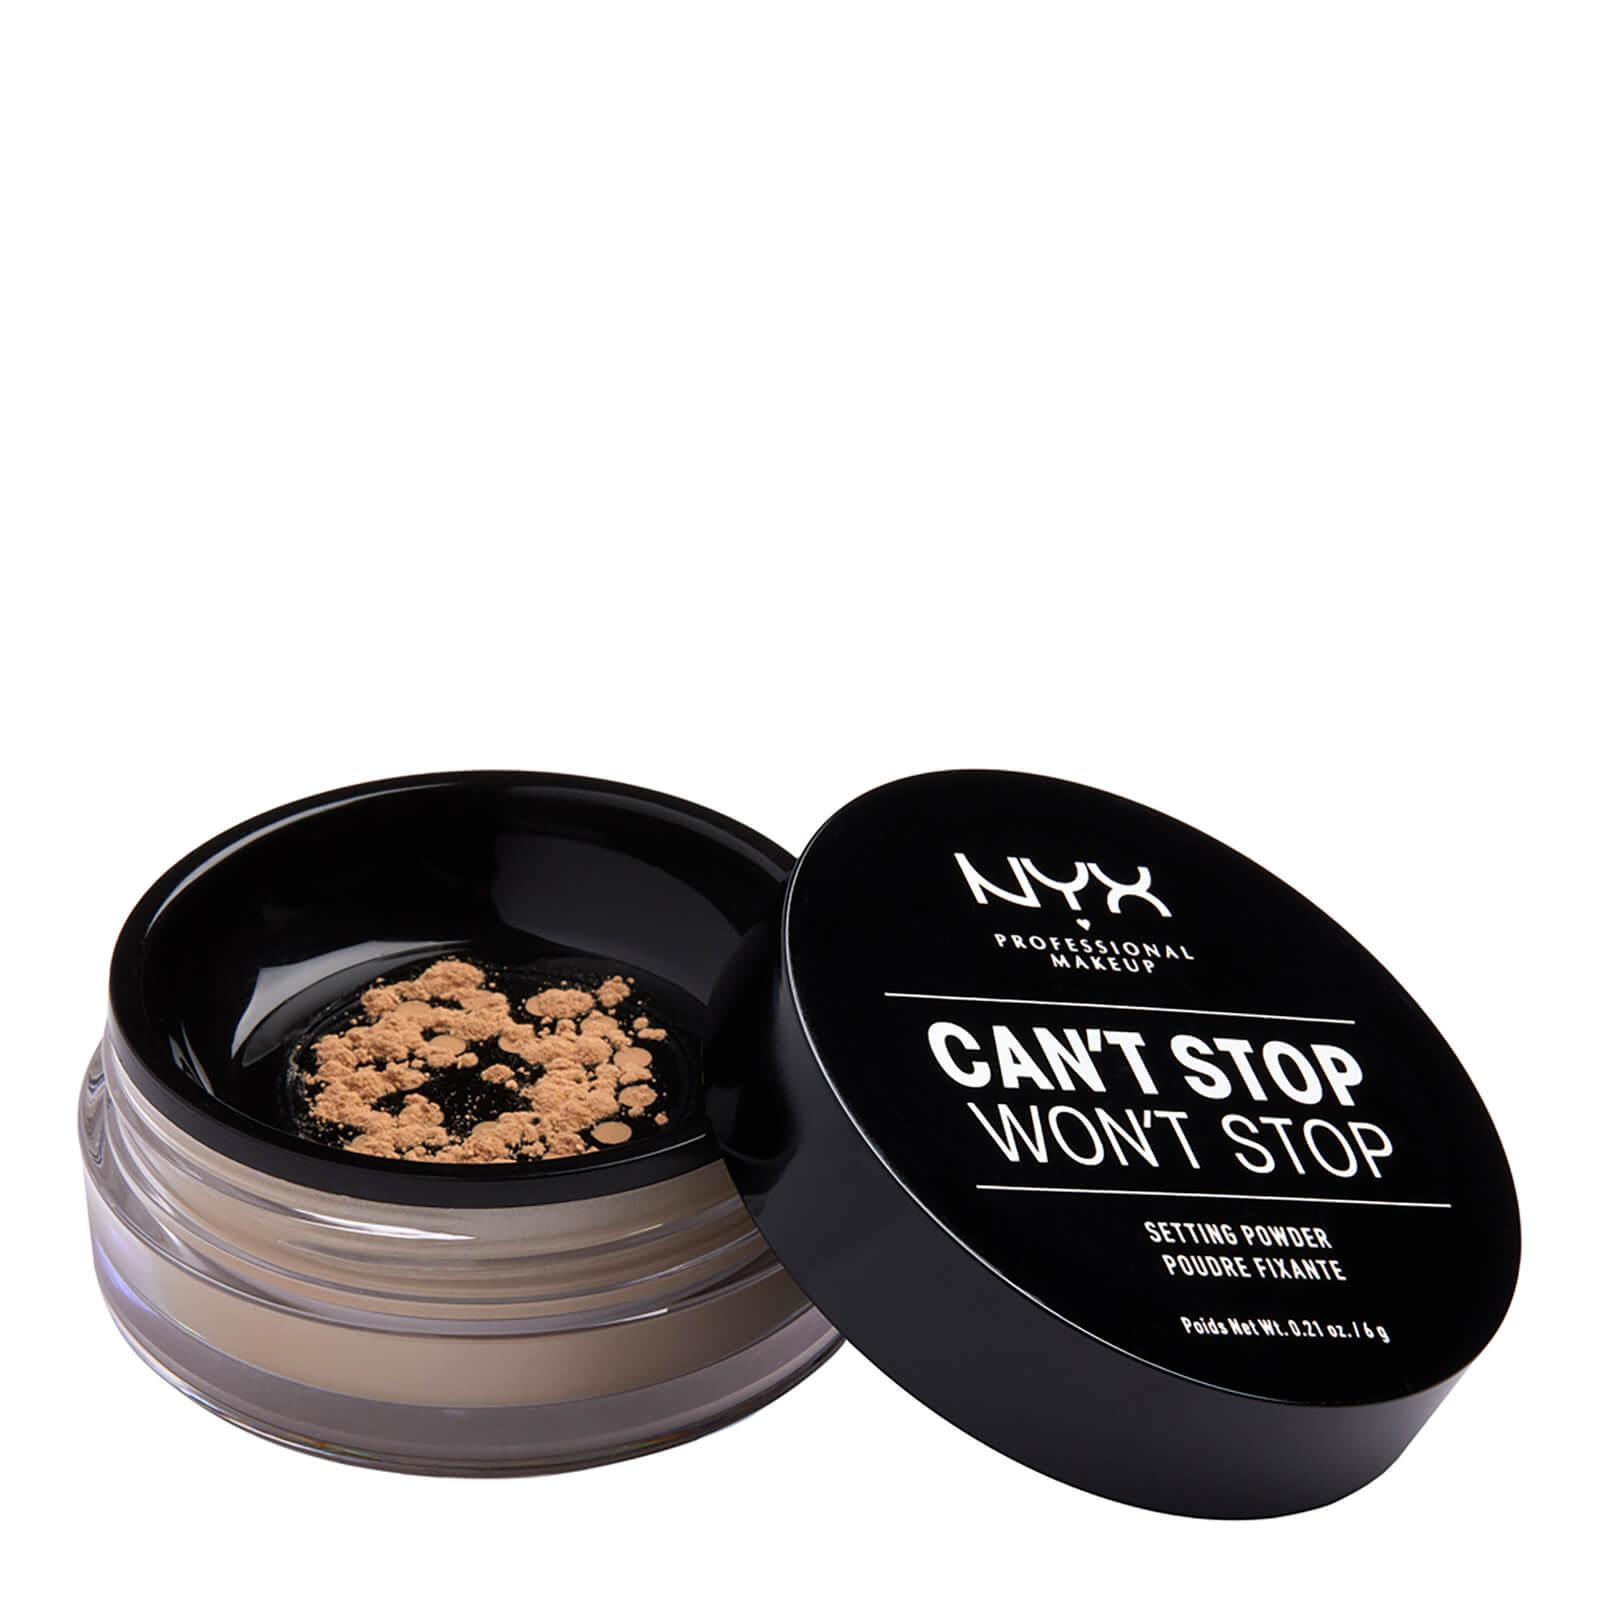 NYX Professional Makeup Can't Stop Won't Stop Setting Powder (Various Shades) - Medium